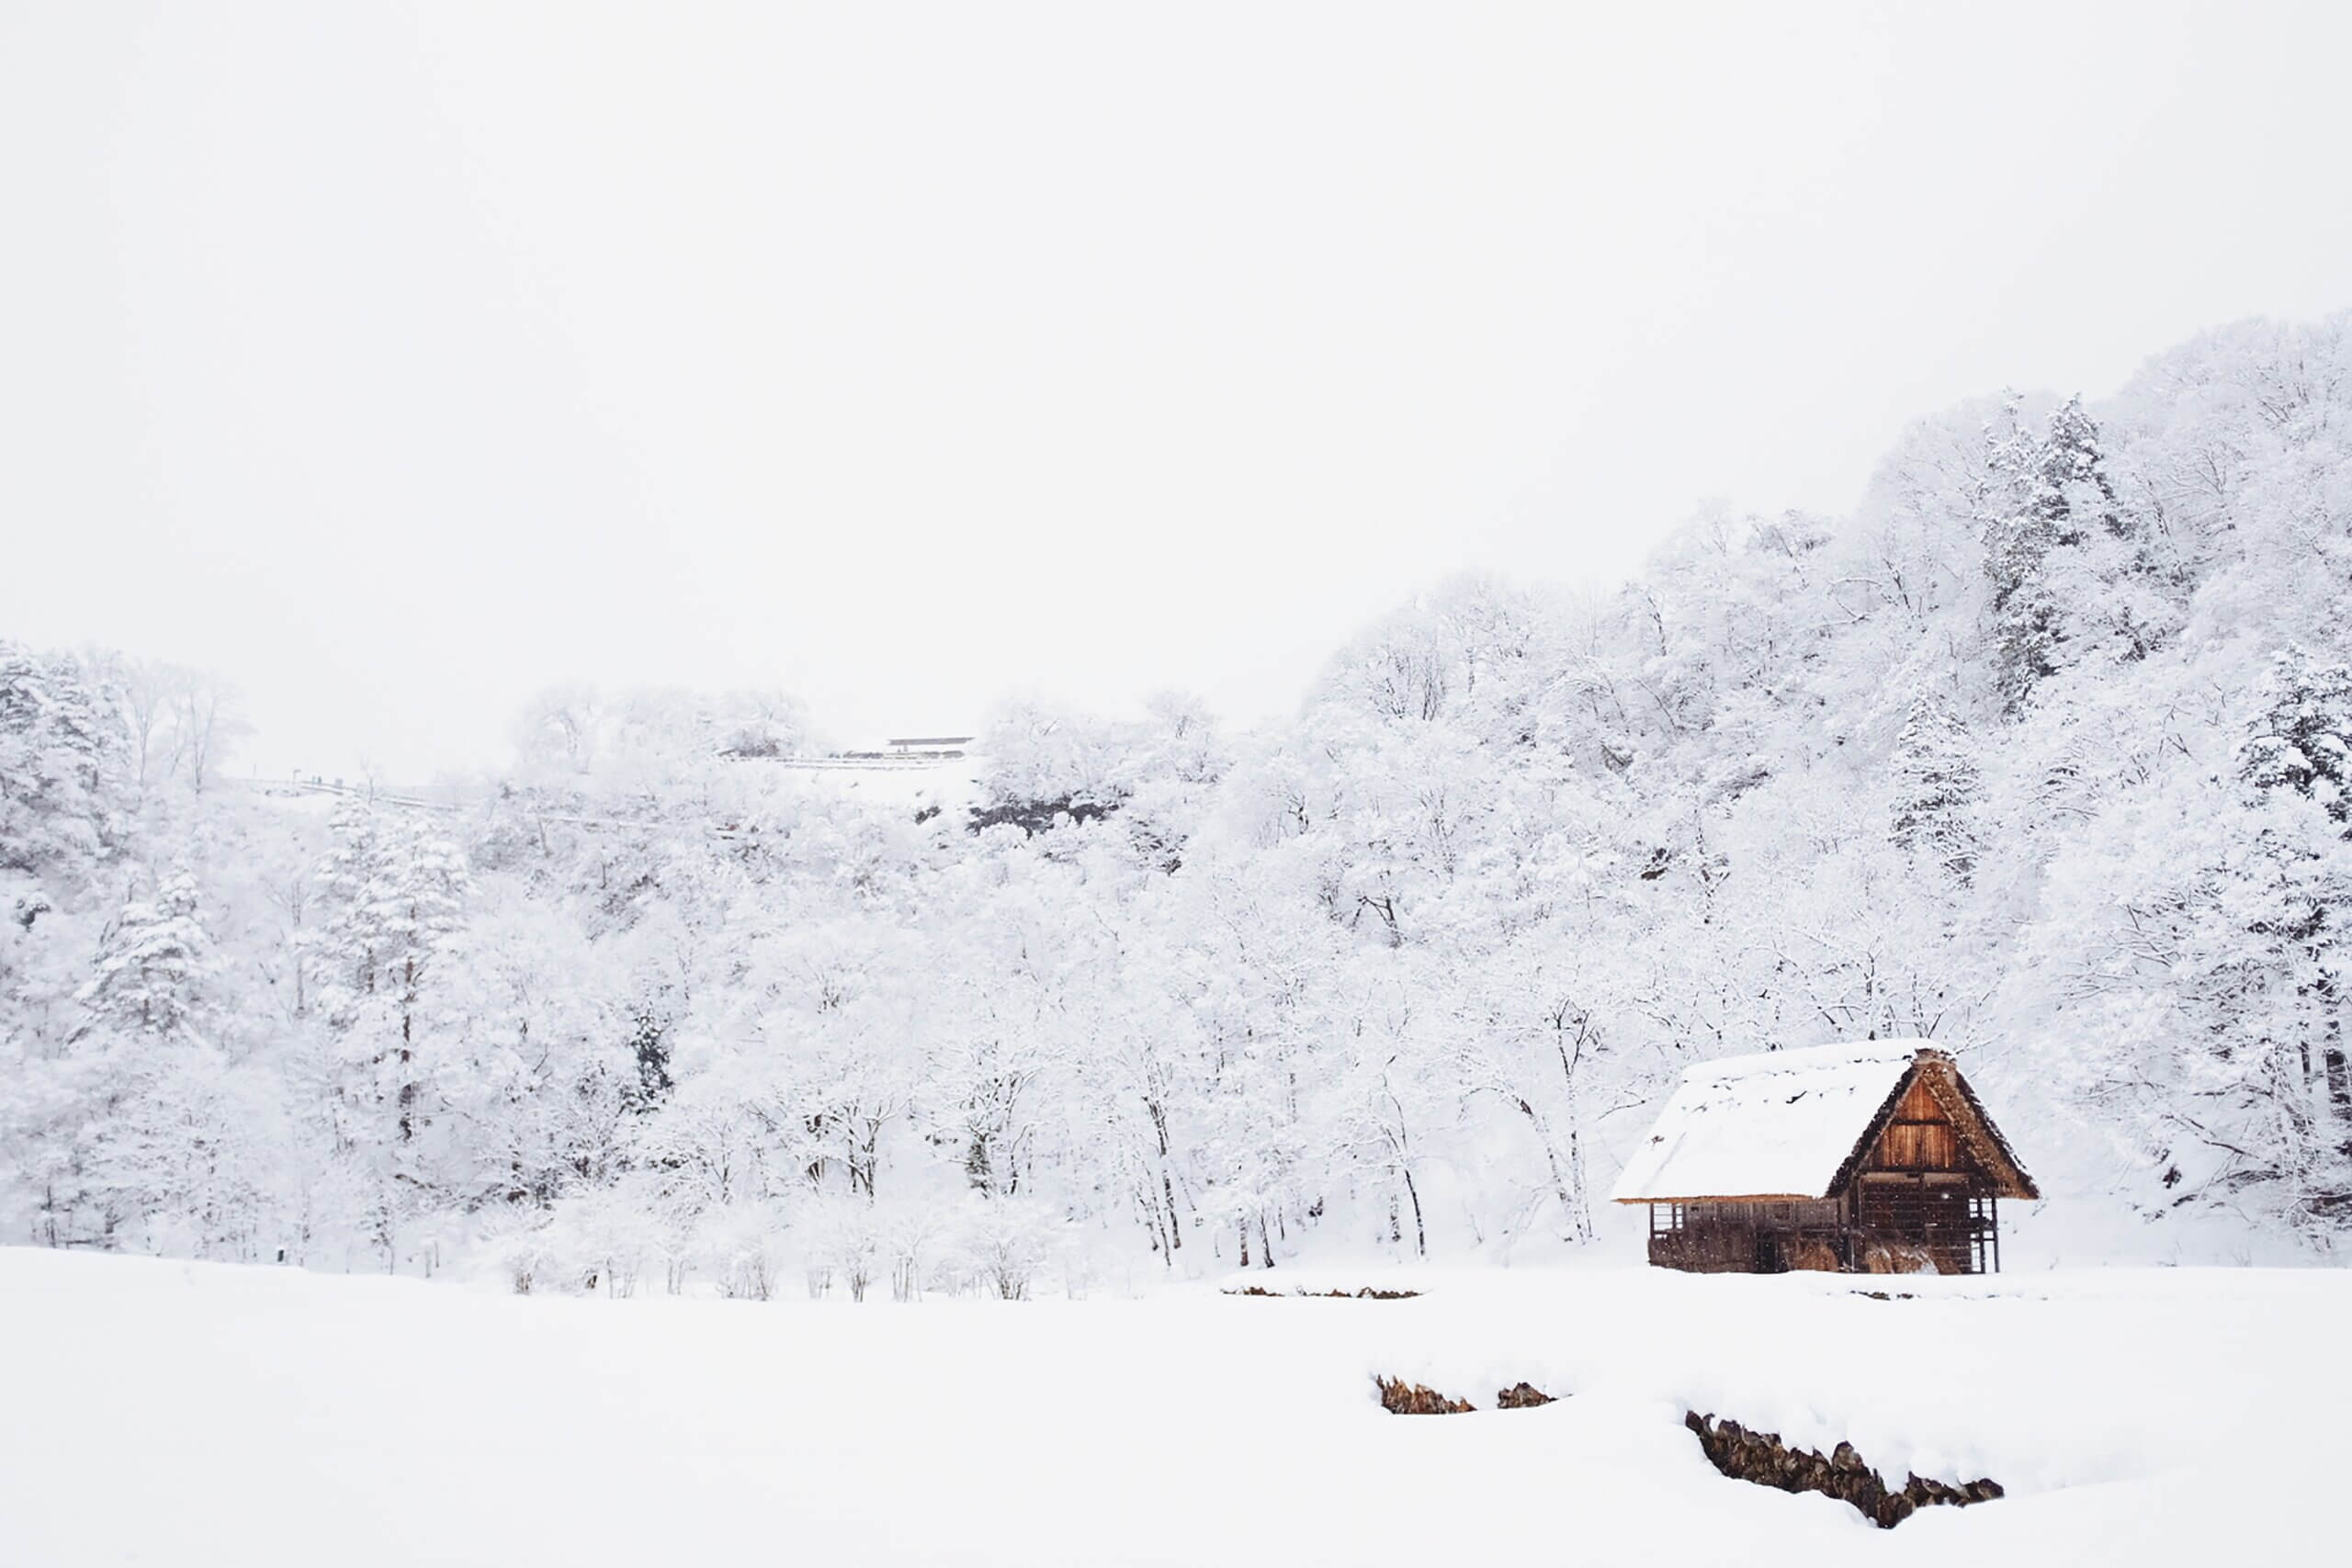 Small cabin in winter wonderland